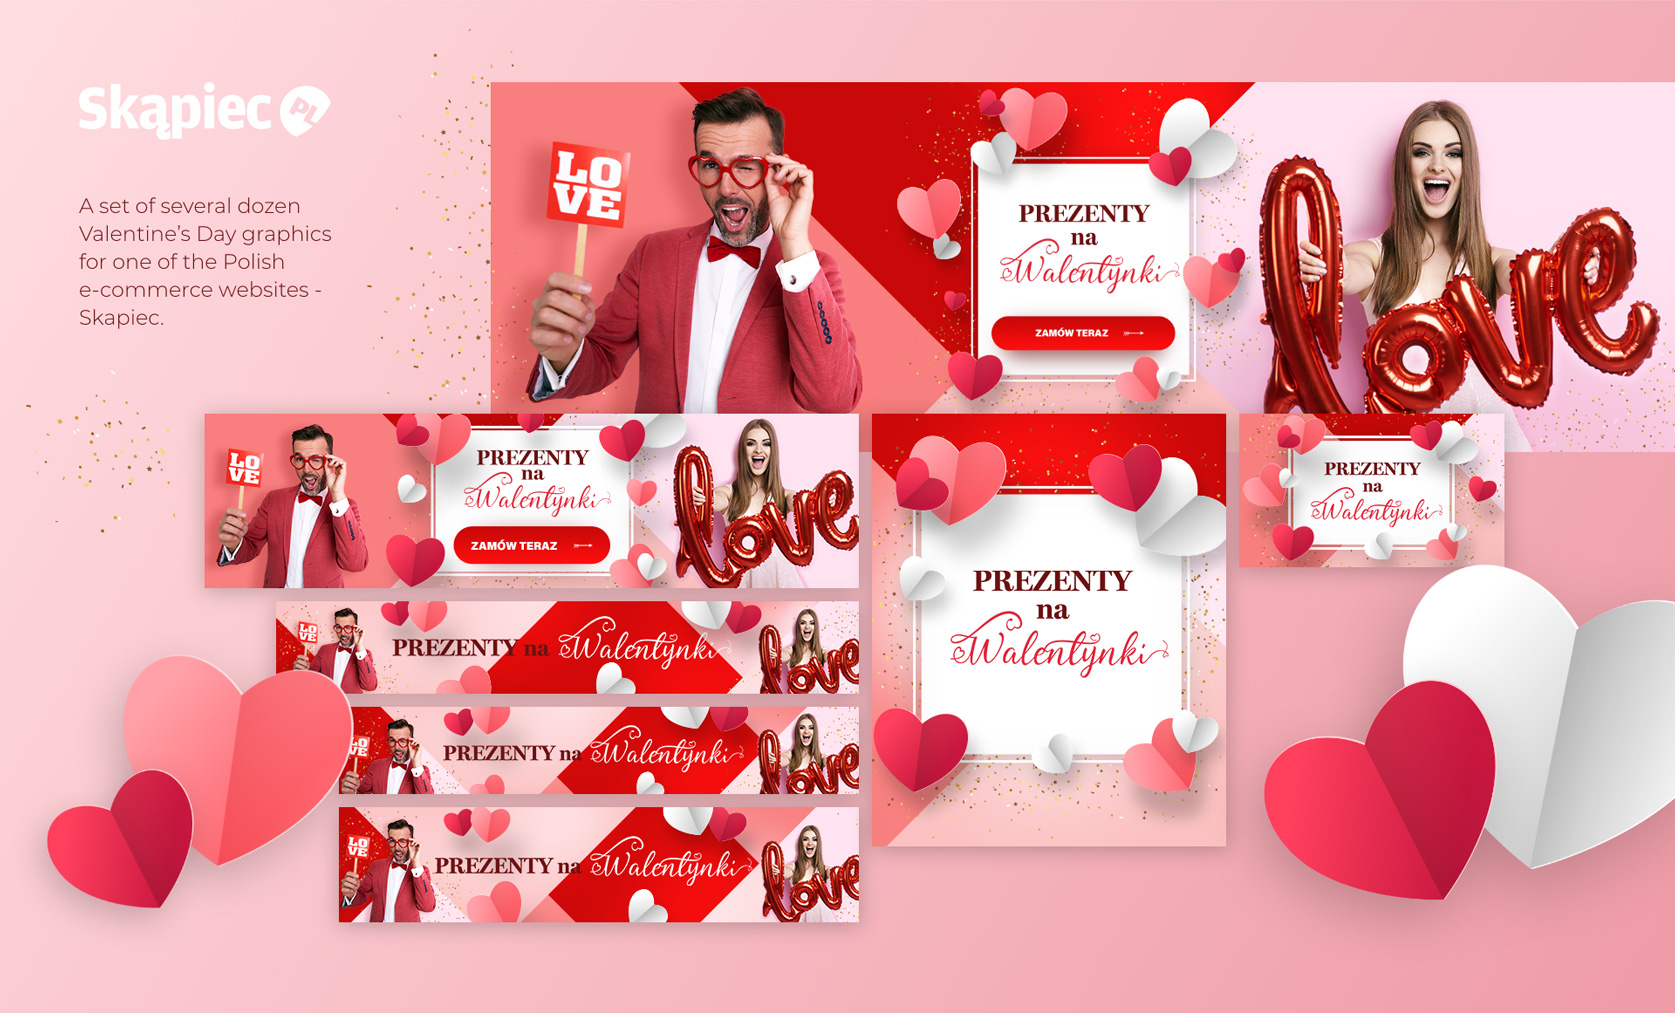 Skapiec.pl - Valentines (web banners set)